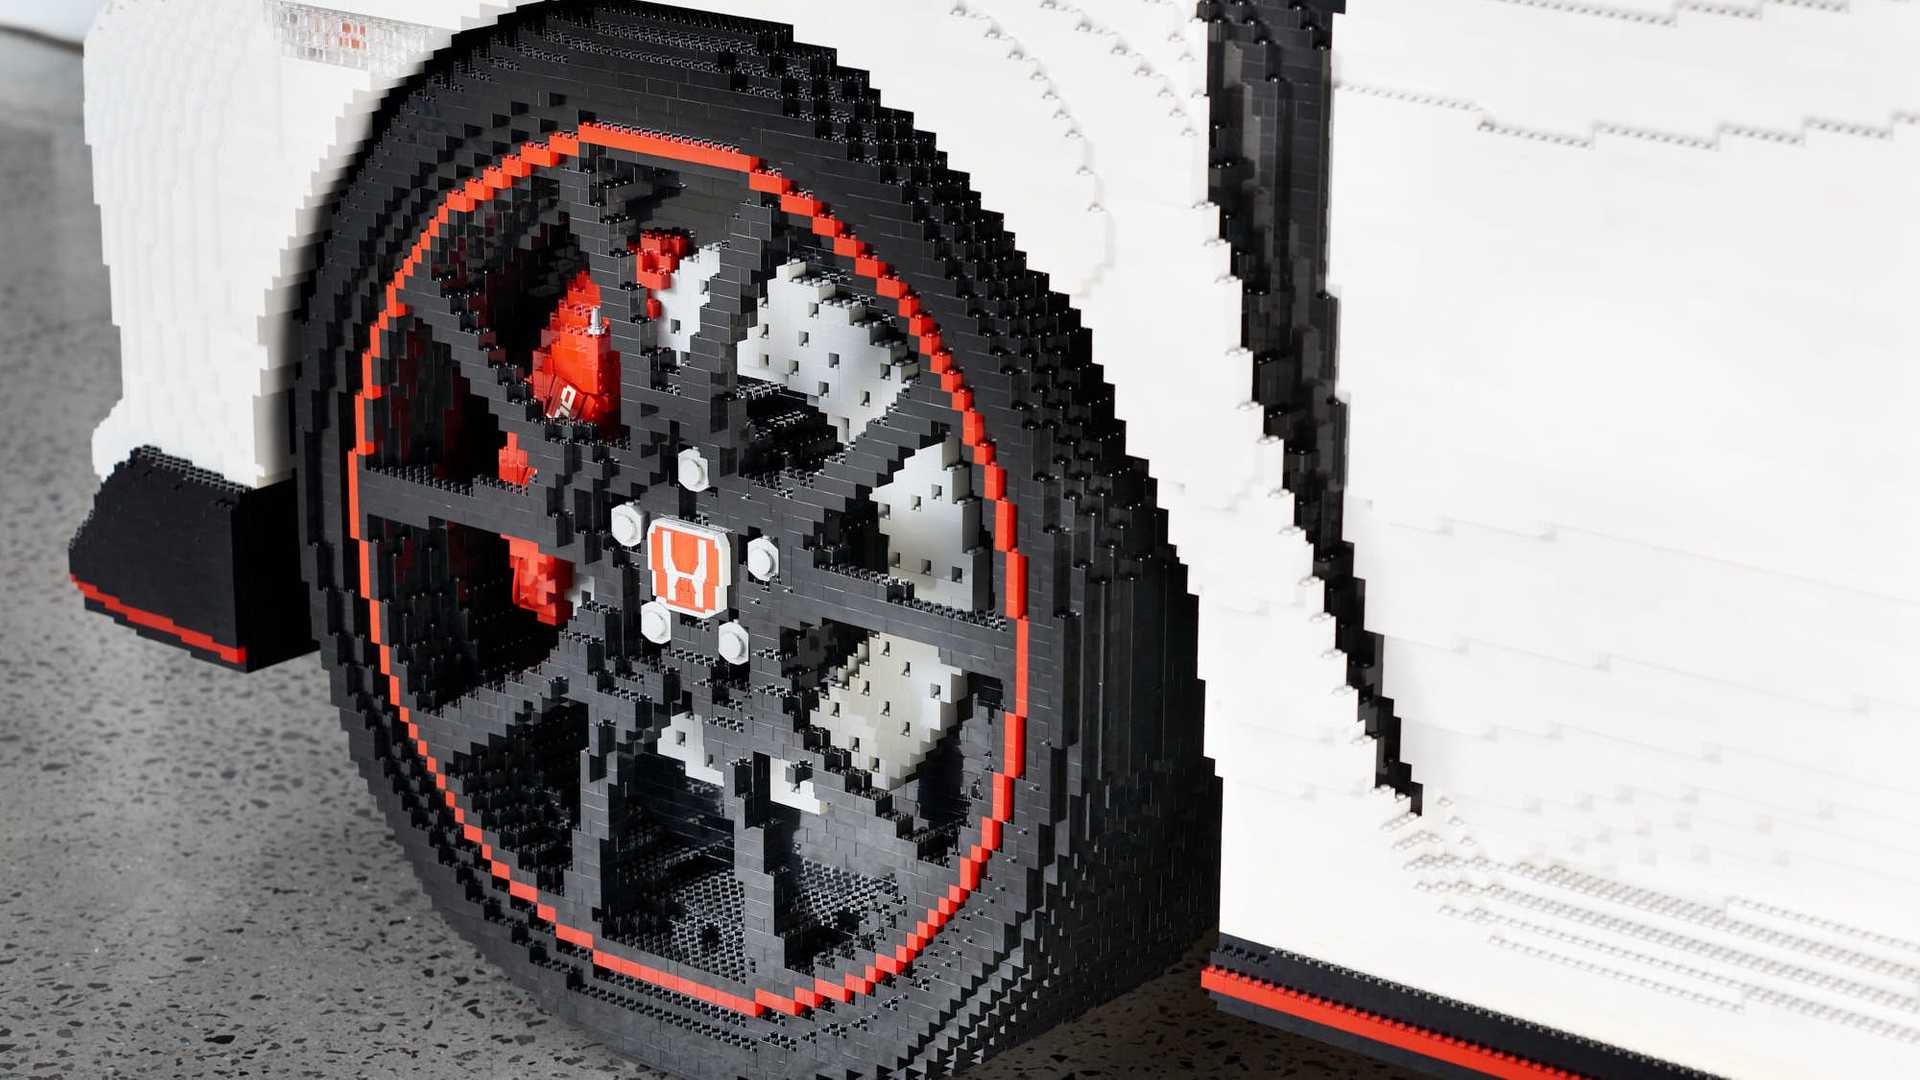 Honda Civic Lego